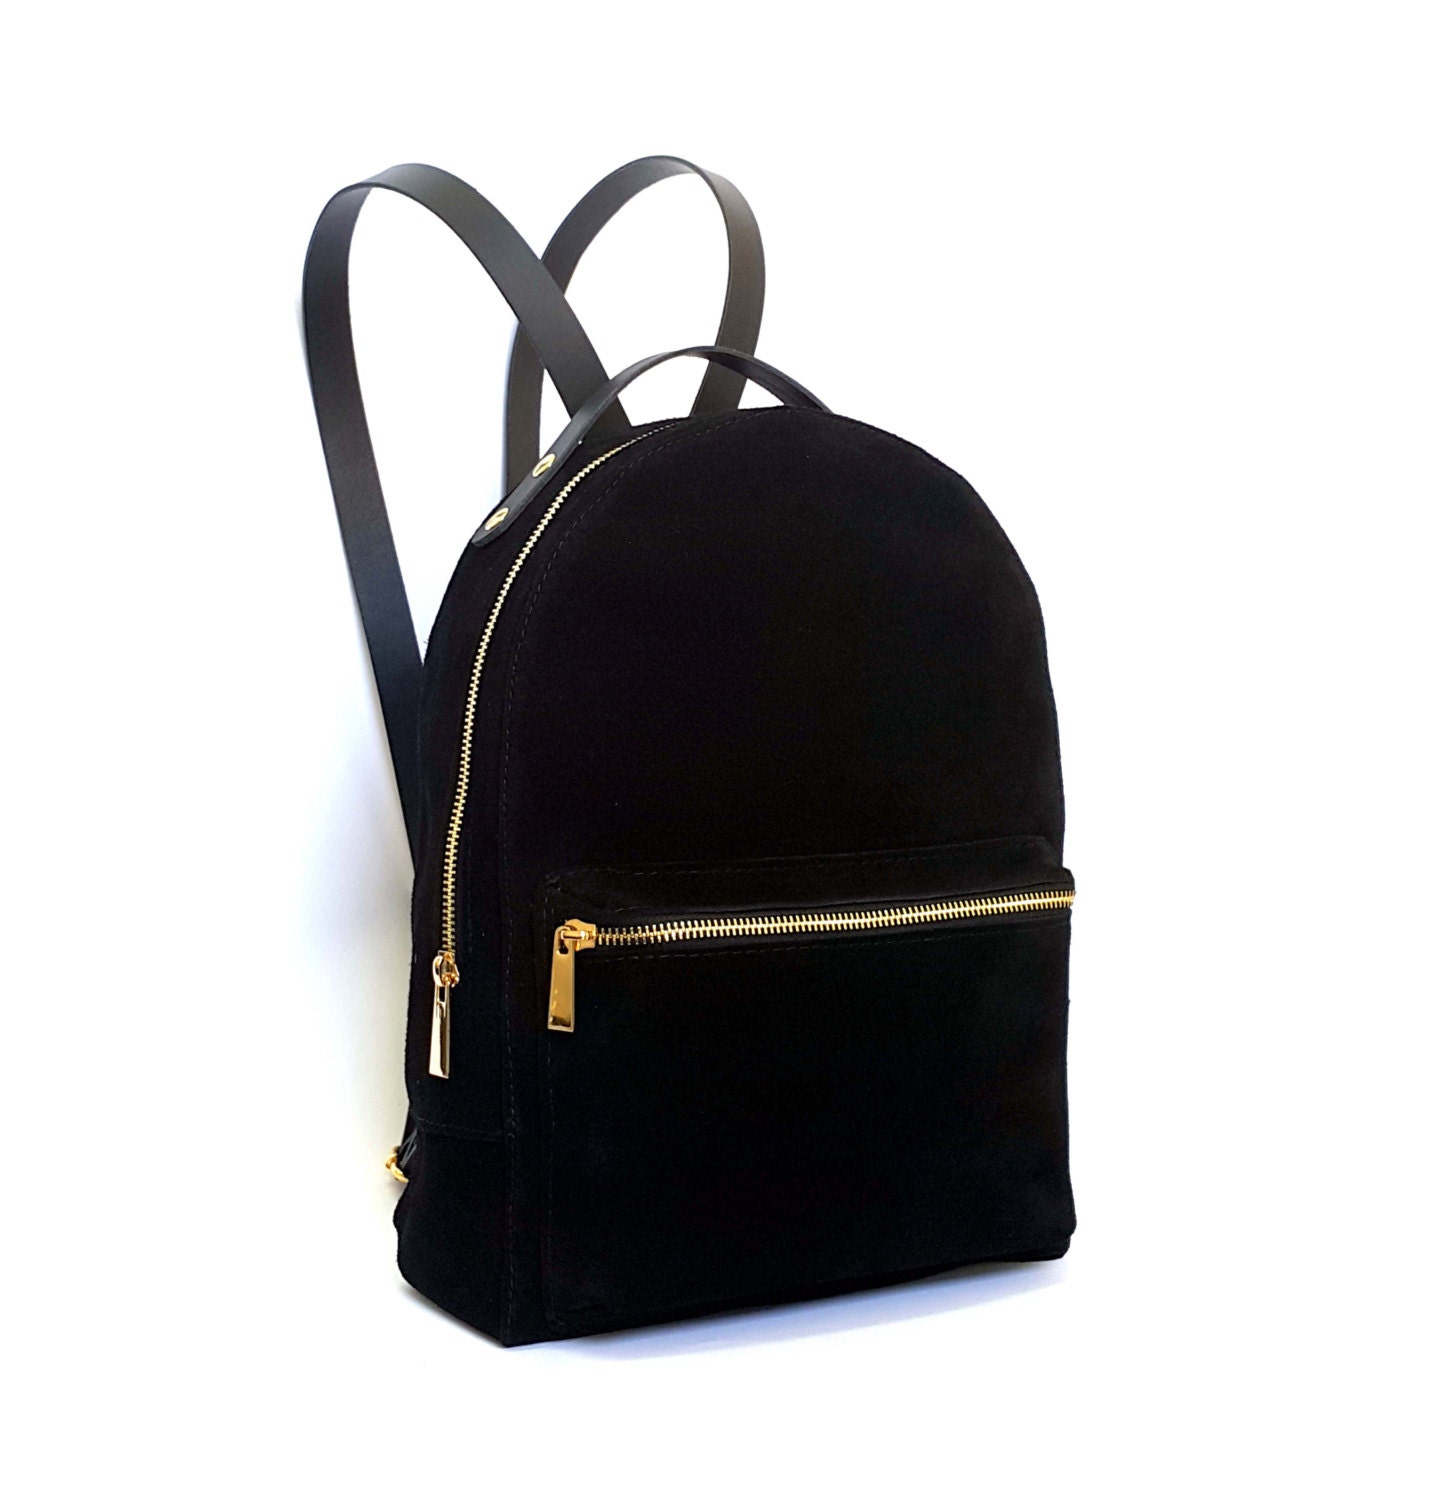 Leather backpack black bag leather rucksack backpack by FUTERAL